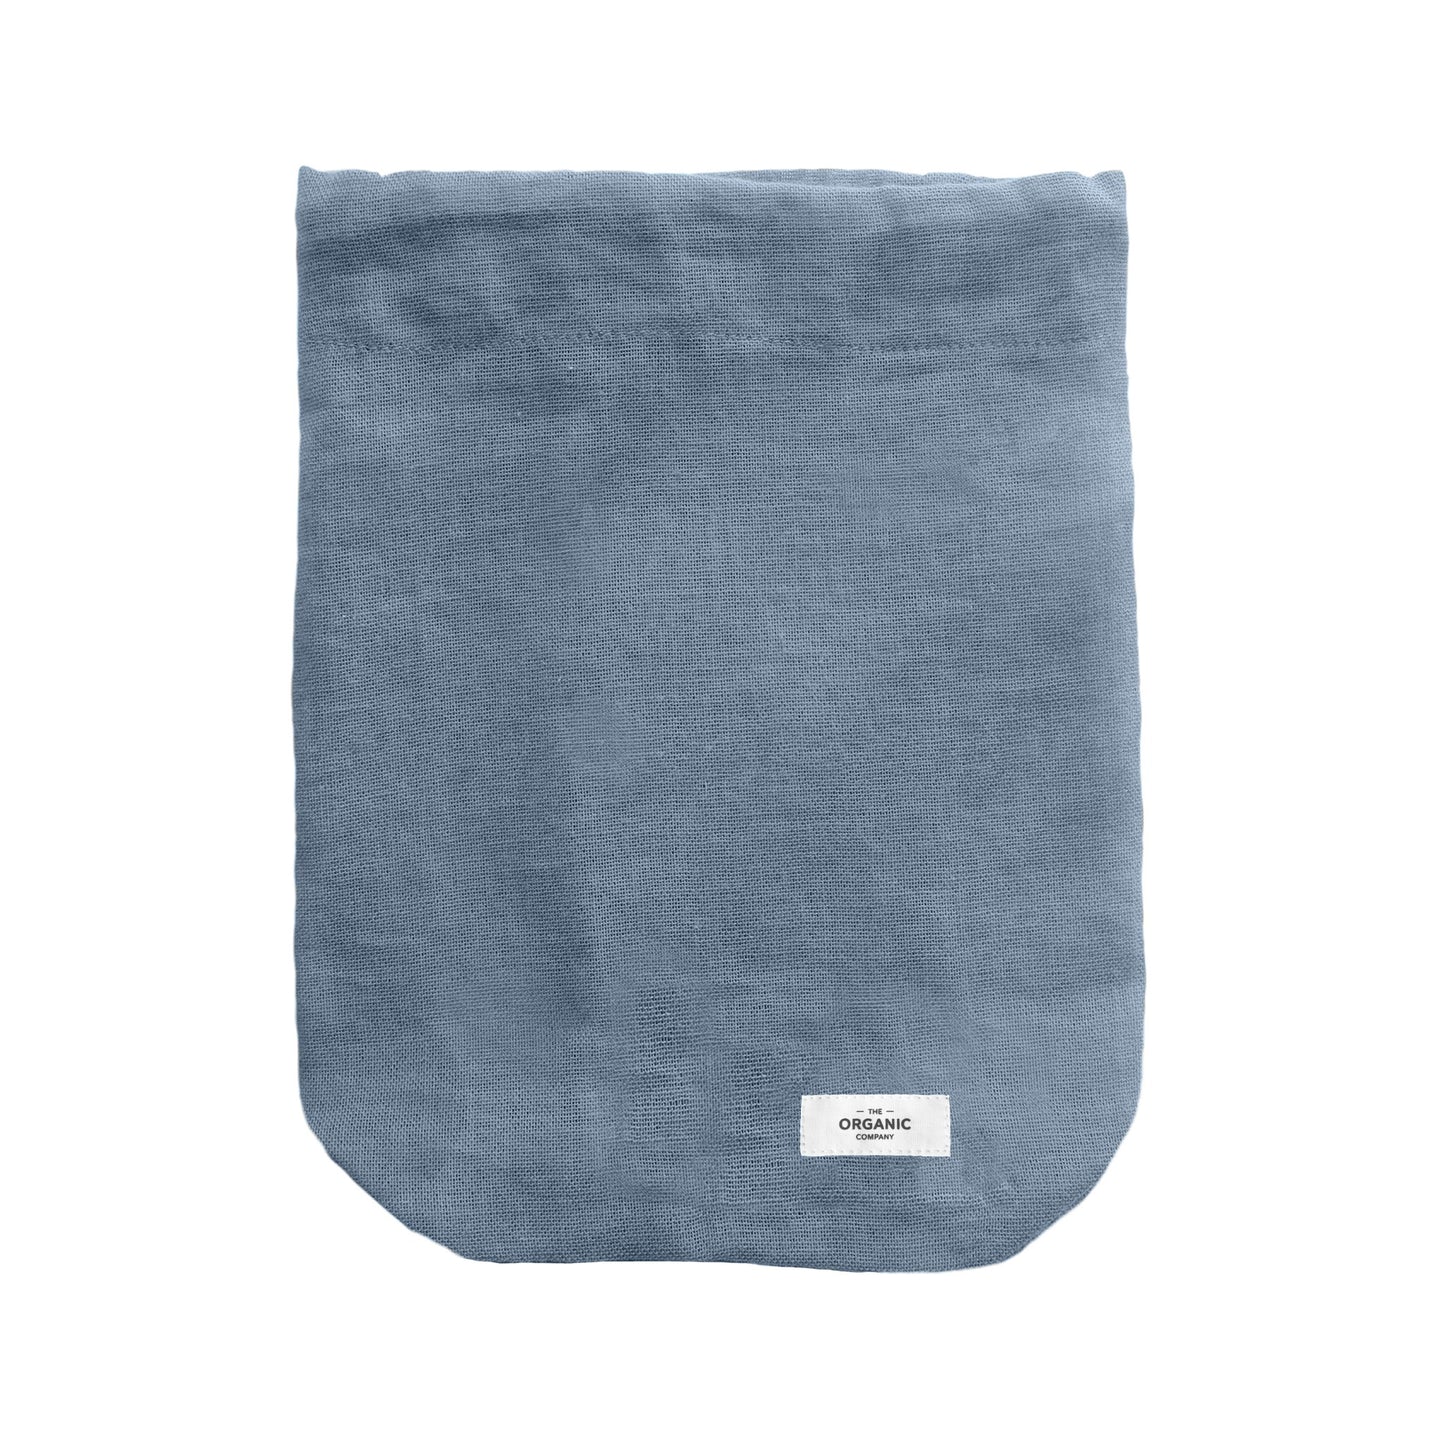 All Purpose Bag Large - Grey Blue